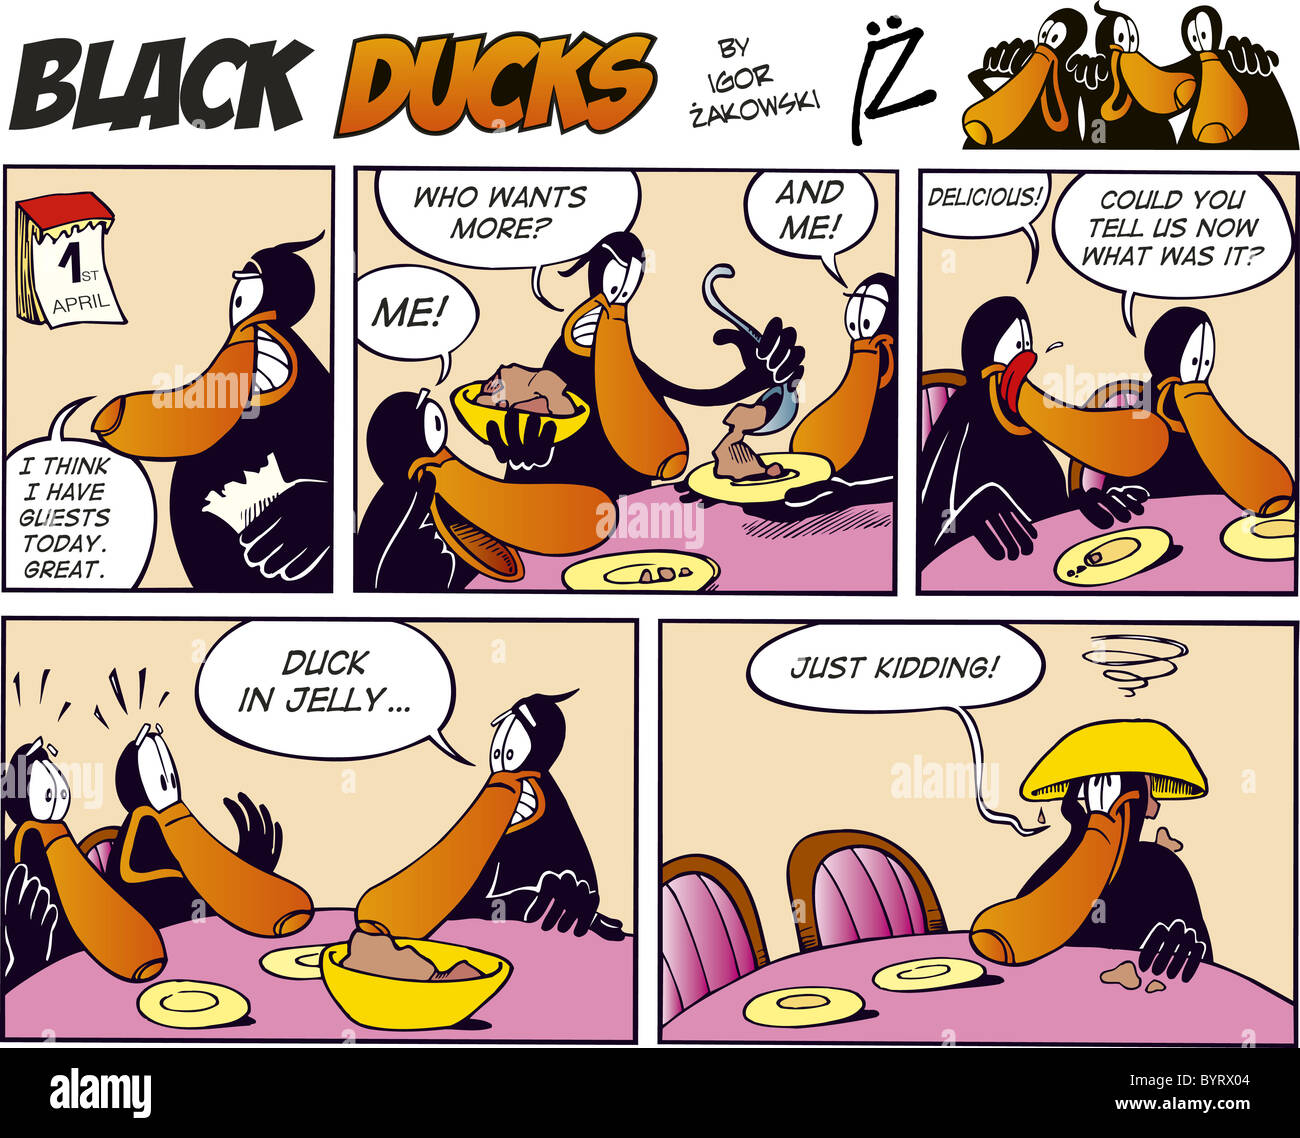 Black Ducks Comic Strip episode 15 Stock Photo